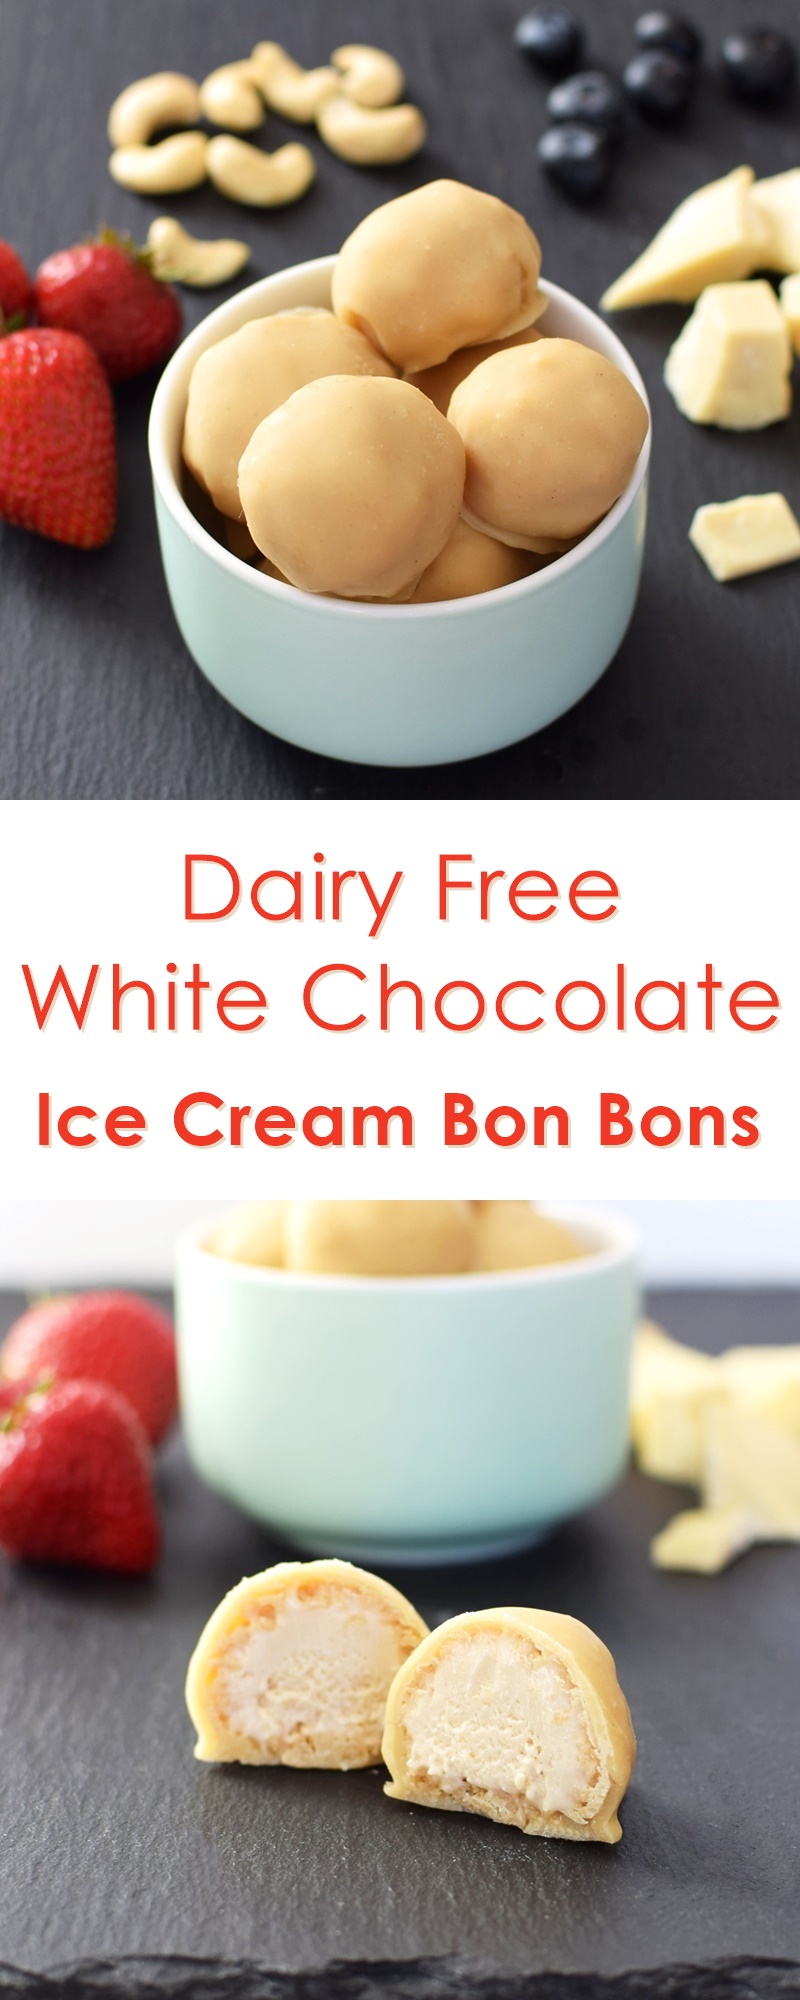 Dairy Free White Chocolate Ice Cream Bon Bons - made w/ a quick homemade vegan white chocolate shell. Gluten-free optional.